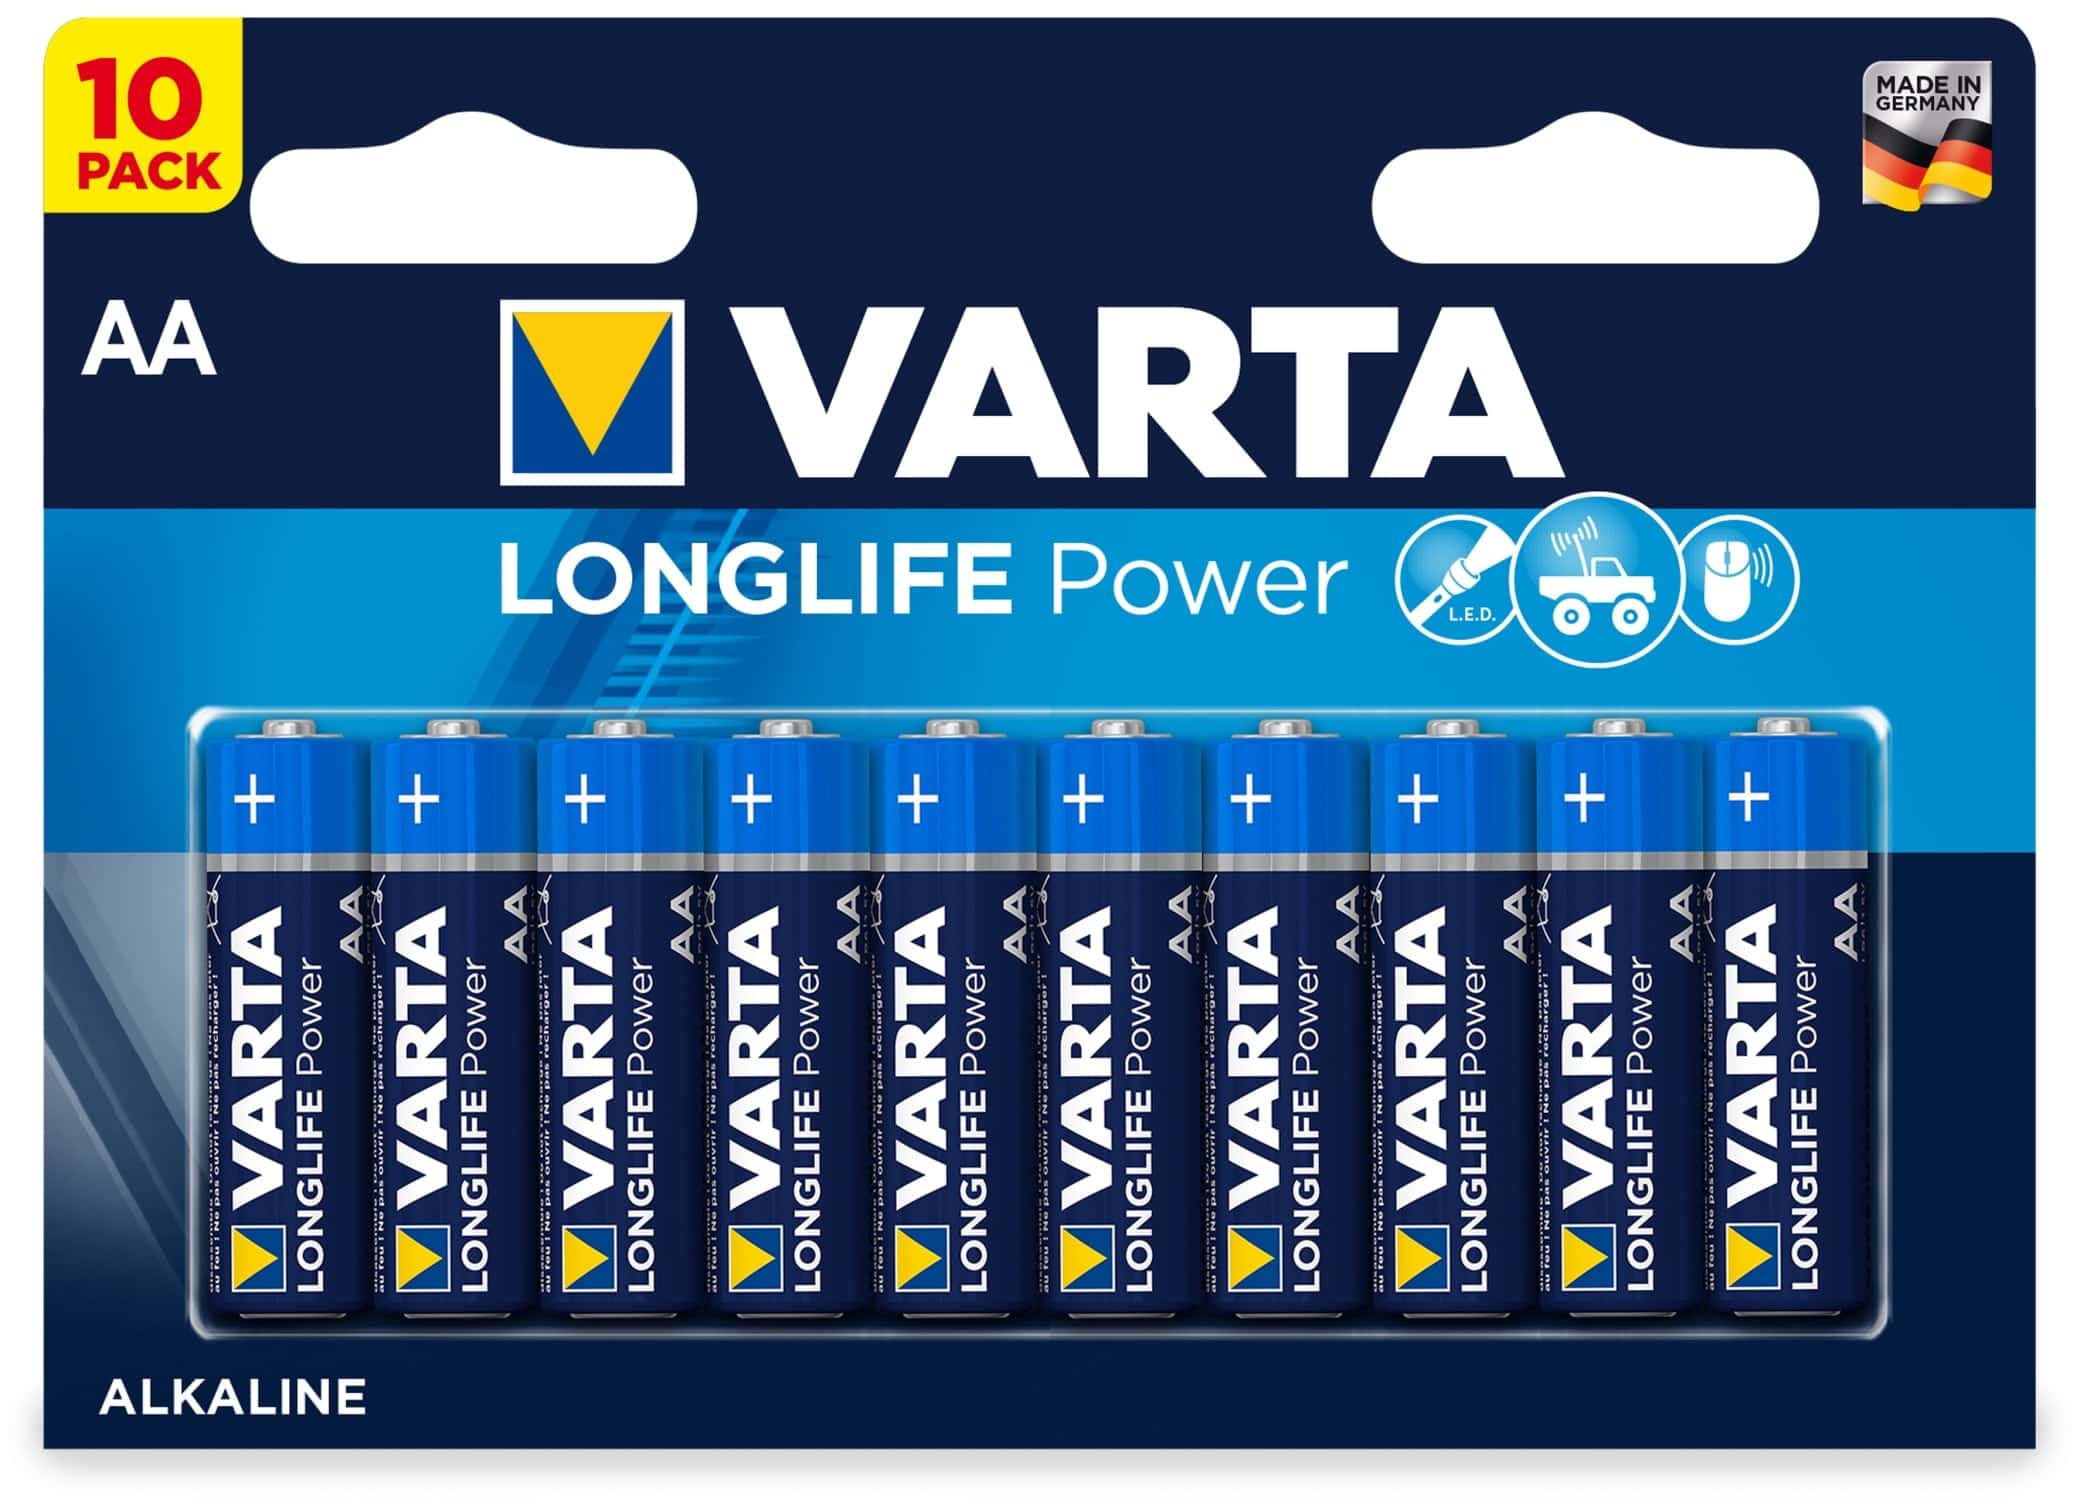 VARTA Mignon-Batterie HIGH ENERGY, 10 Stück